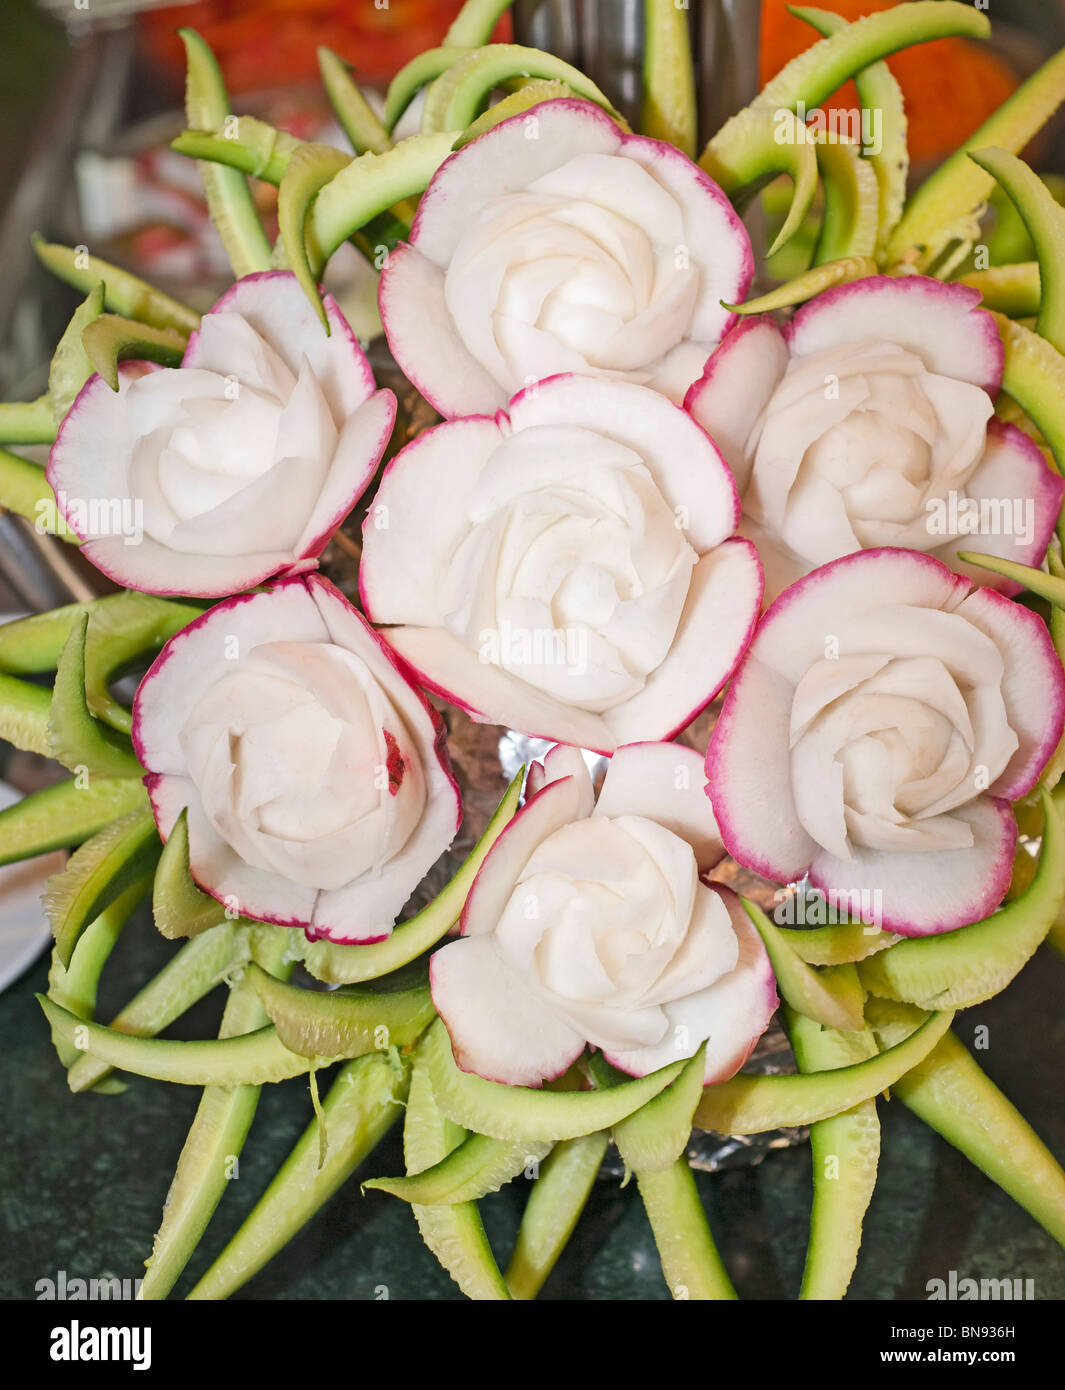 https://c8.alamy.com/comp/BN936H/flower-salad-decoration-made-from-radish-and-cucumber-BN936H.jpg